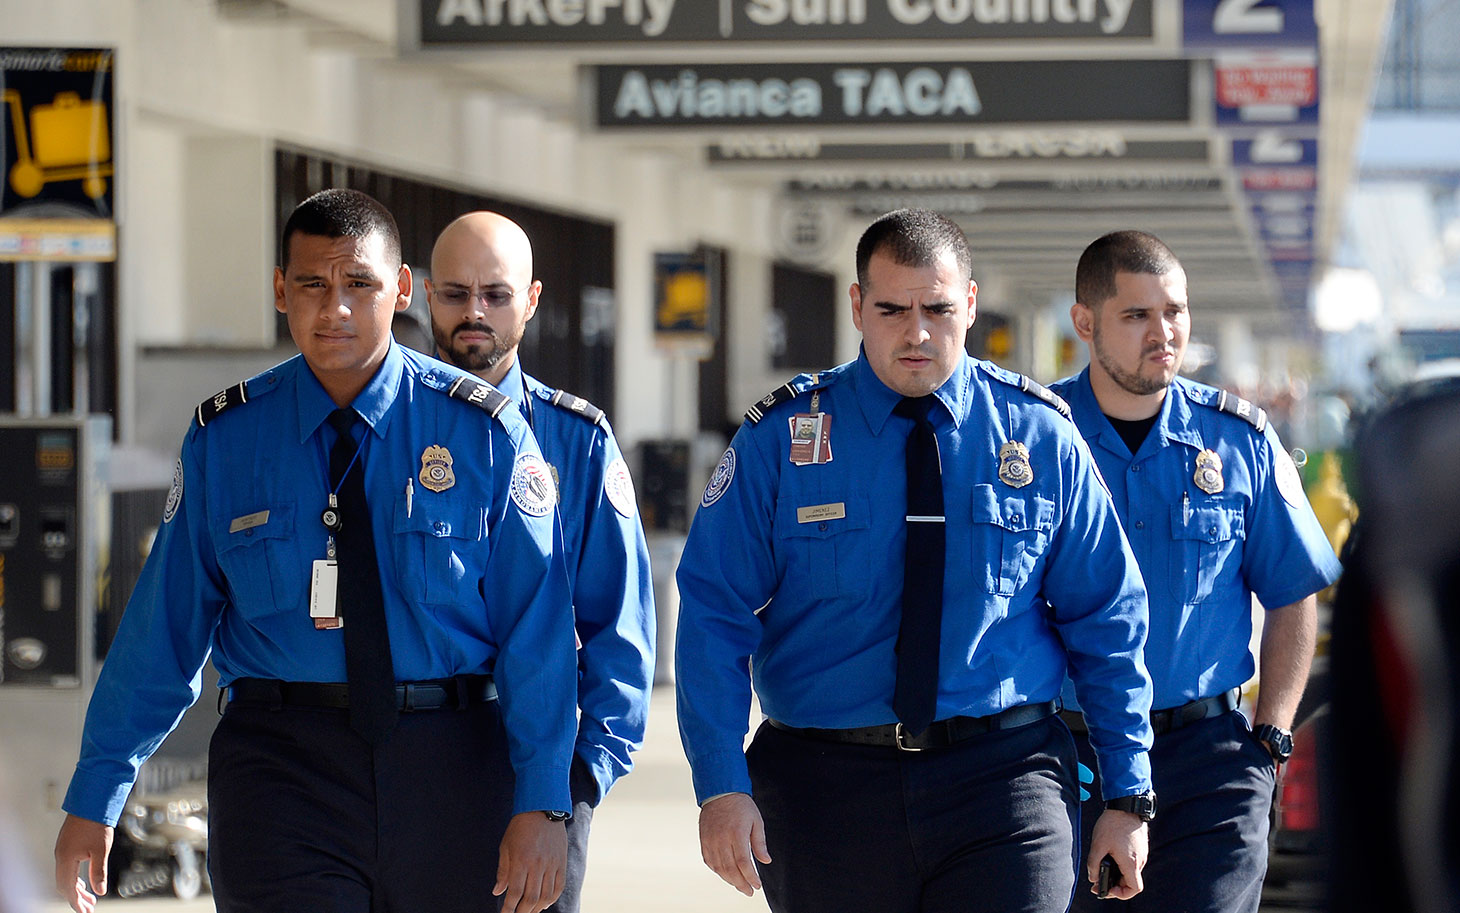 TSA searches passenger AFTER his flight lands (VIDEO)